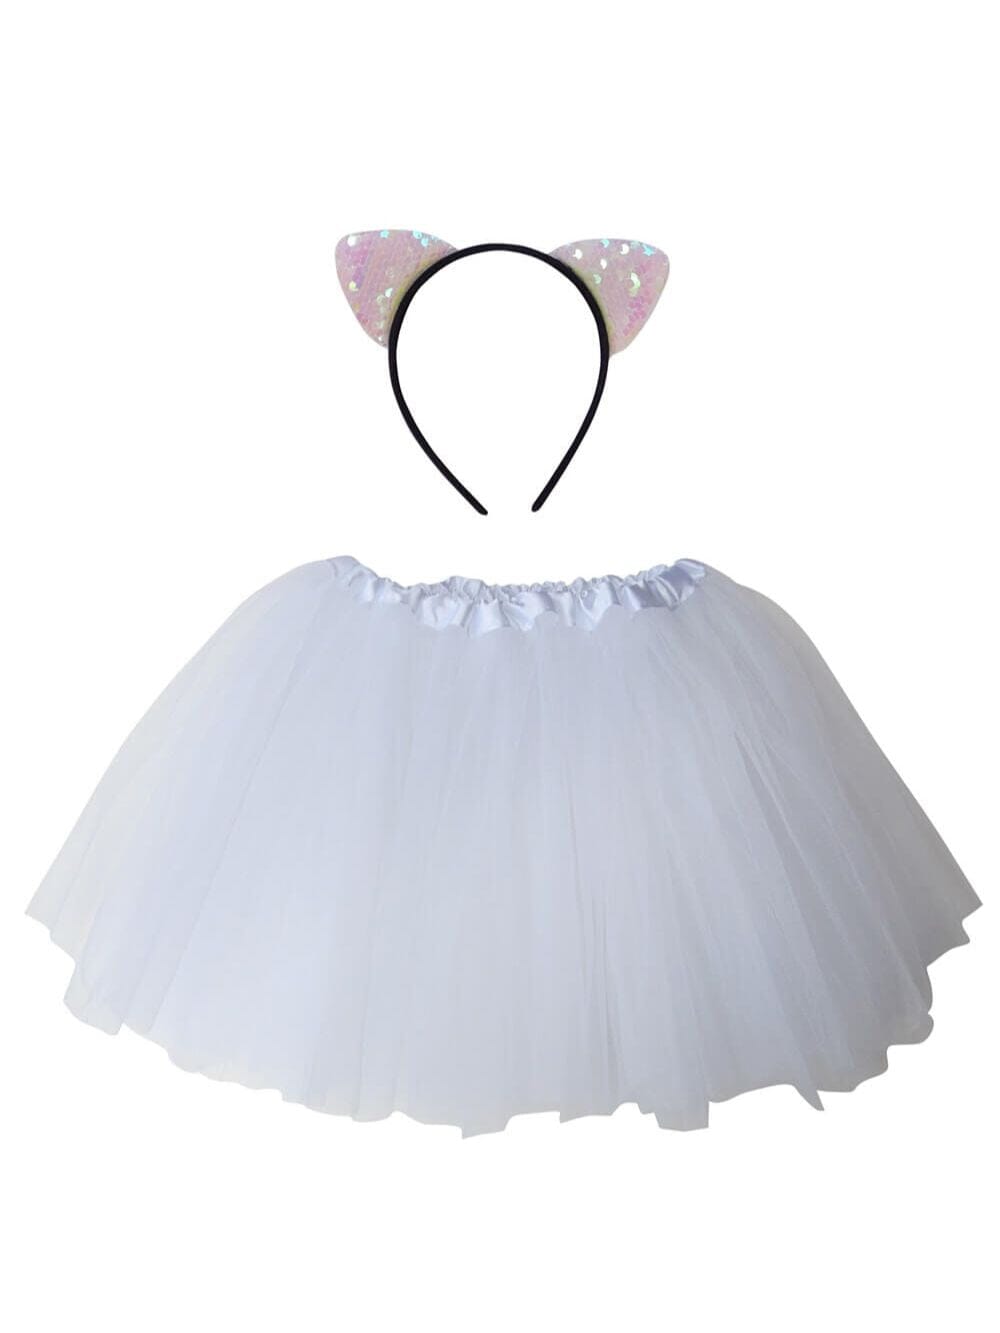 Adult White Cat Costume - Tutu Skirt & Flip Sequin Headband Set for Adult or Plus Size - Sydney So Sweet